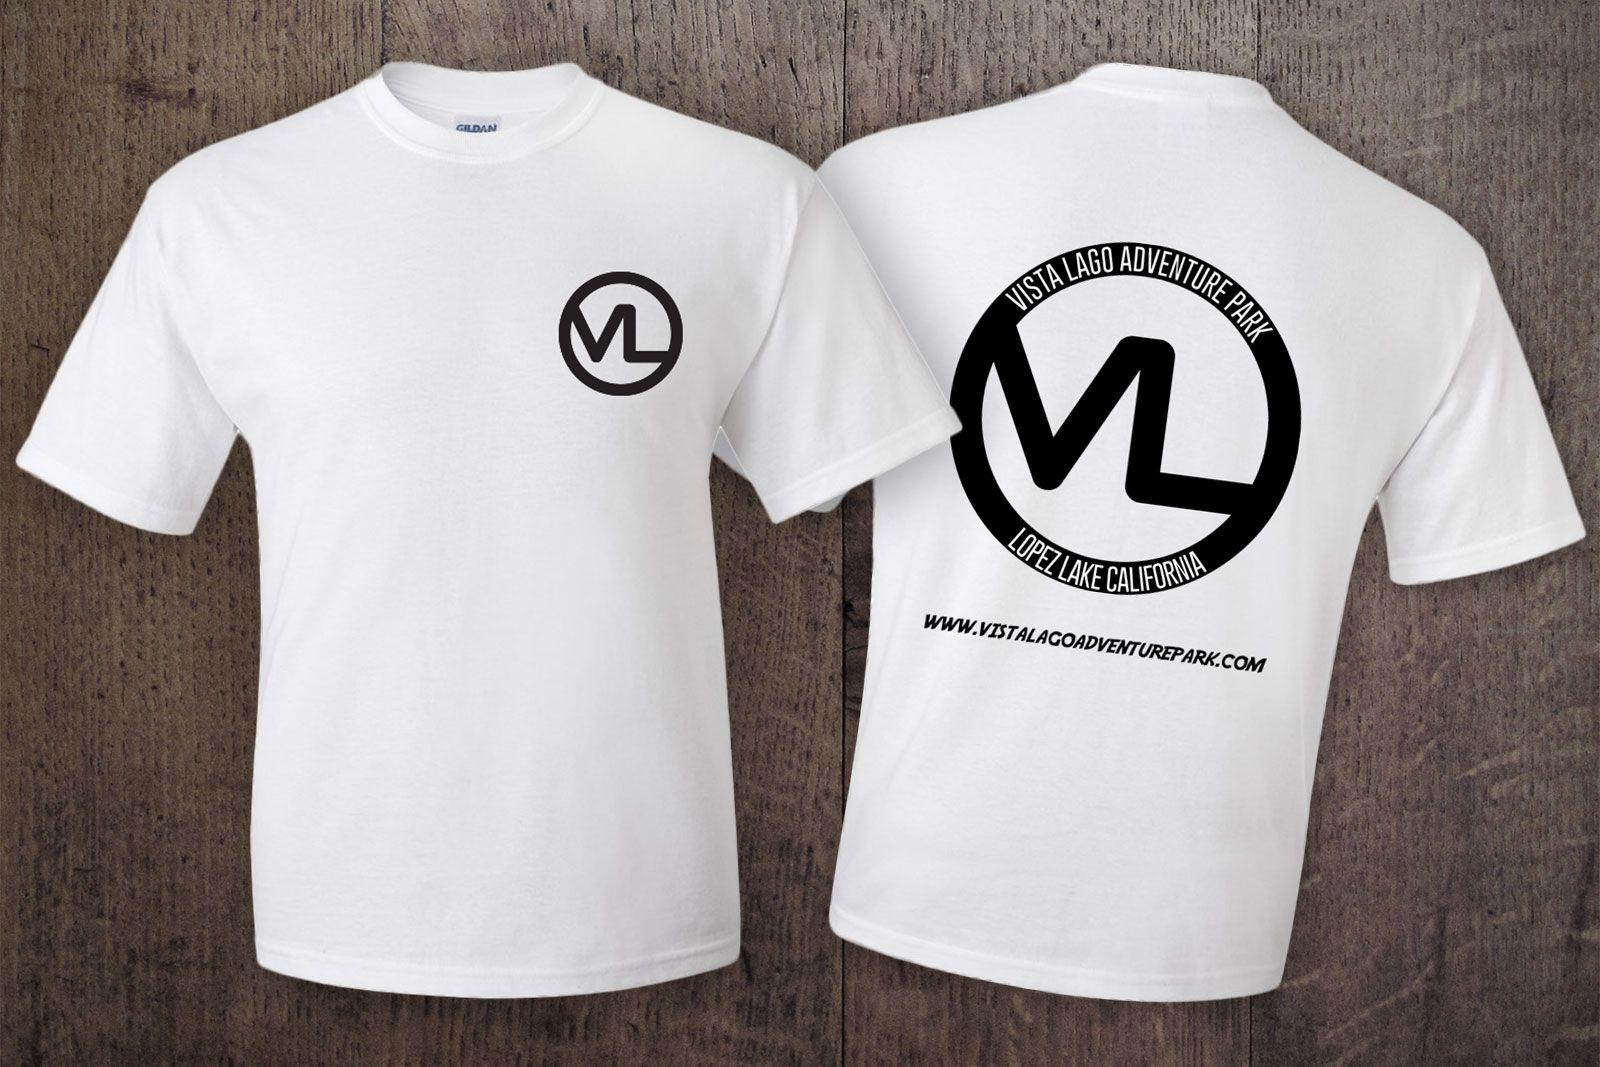 Standard VRA Logo Shirts